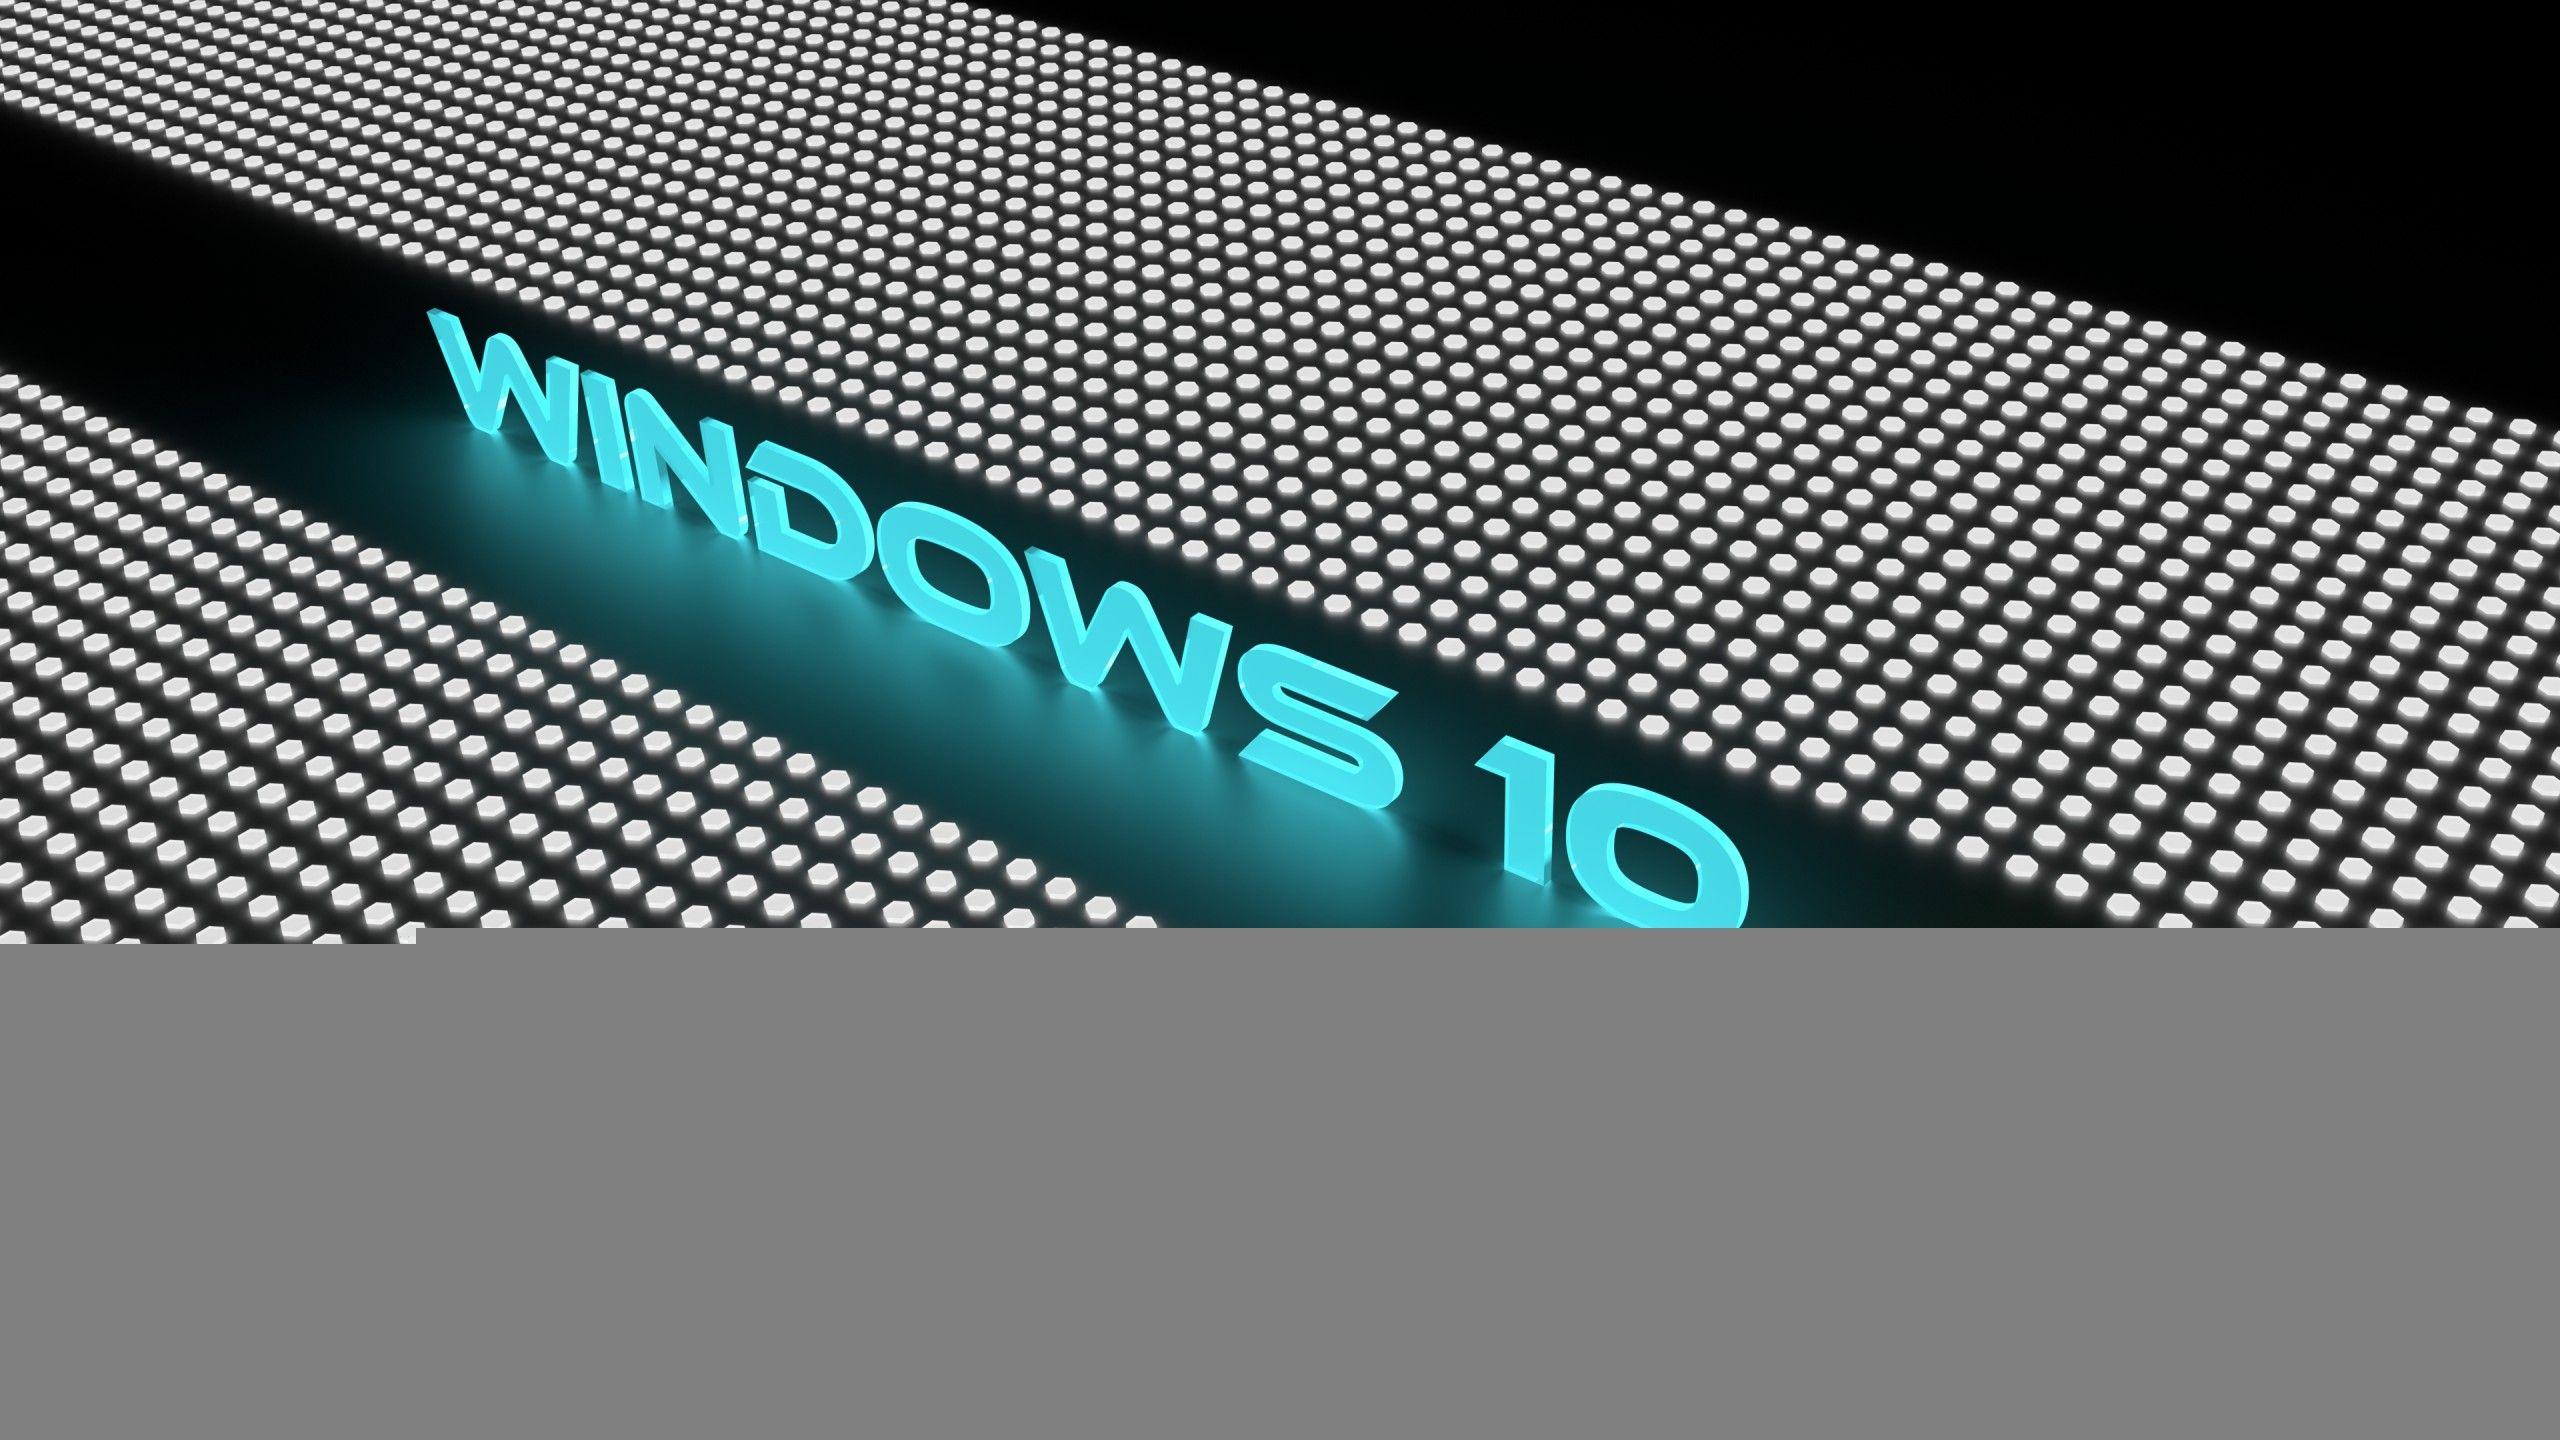 Wallpaper Windows 10 Pro, Neon colors, 4K, Technology